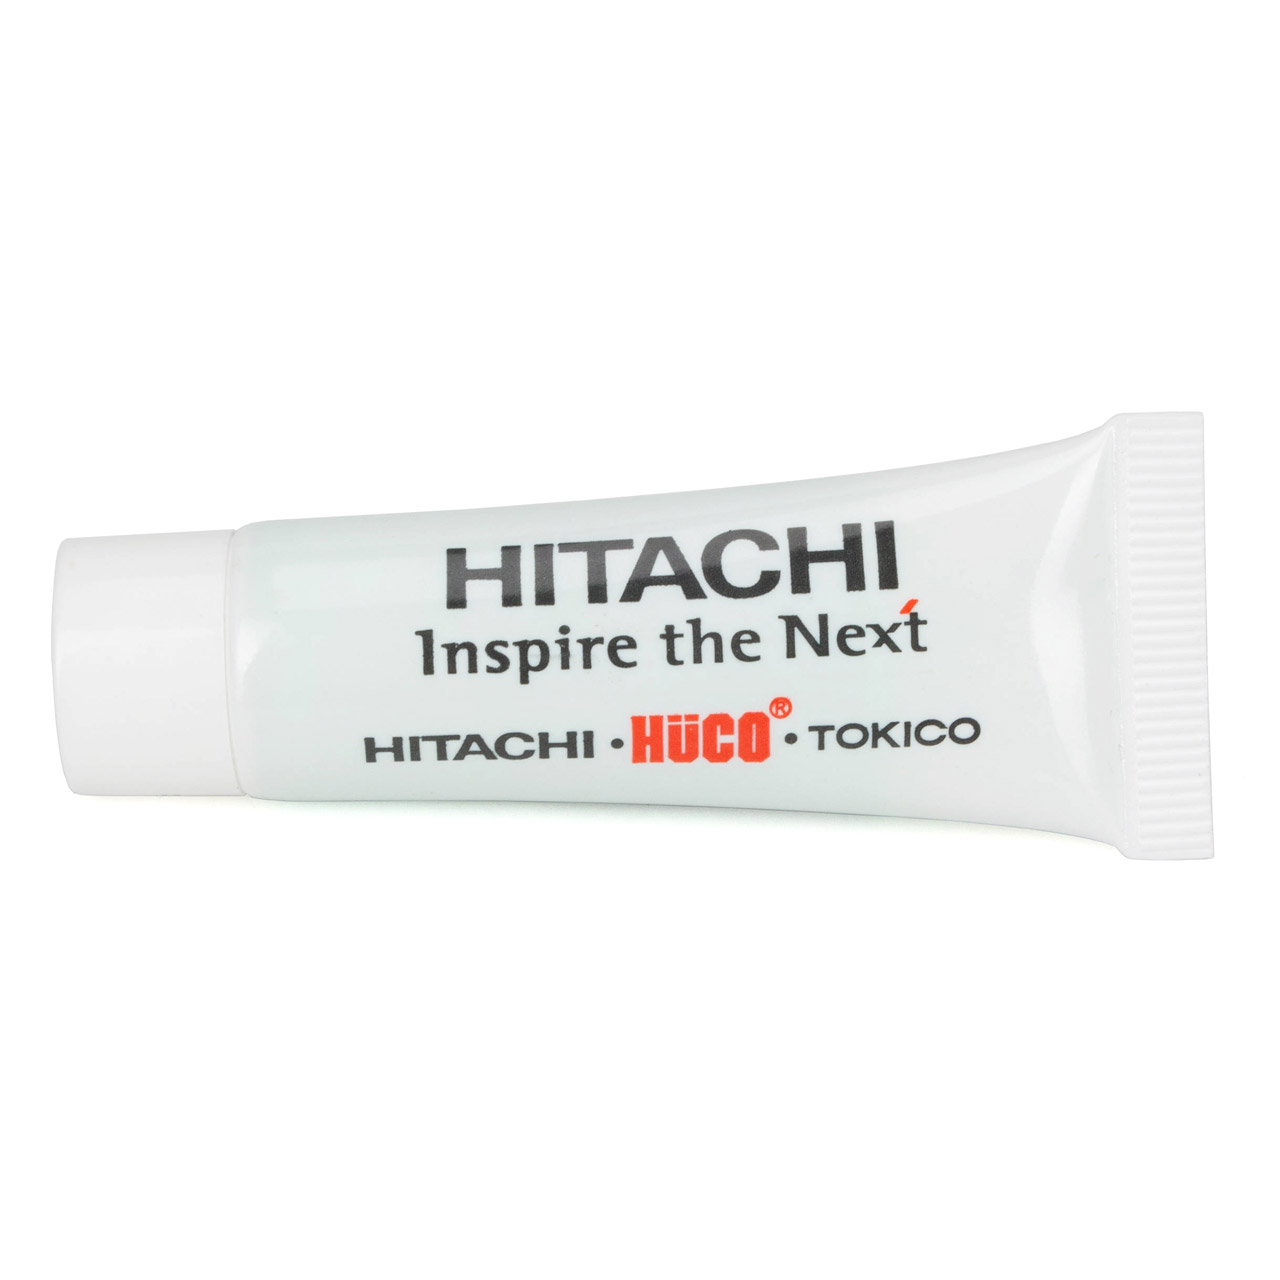 HITACHI 134097 Zündkerzen Montagefett Kerzensteckerfett Paste Tube 10g